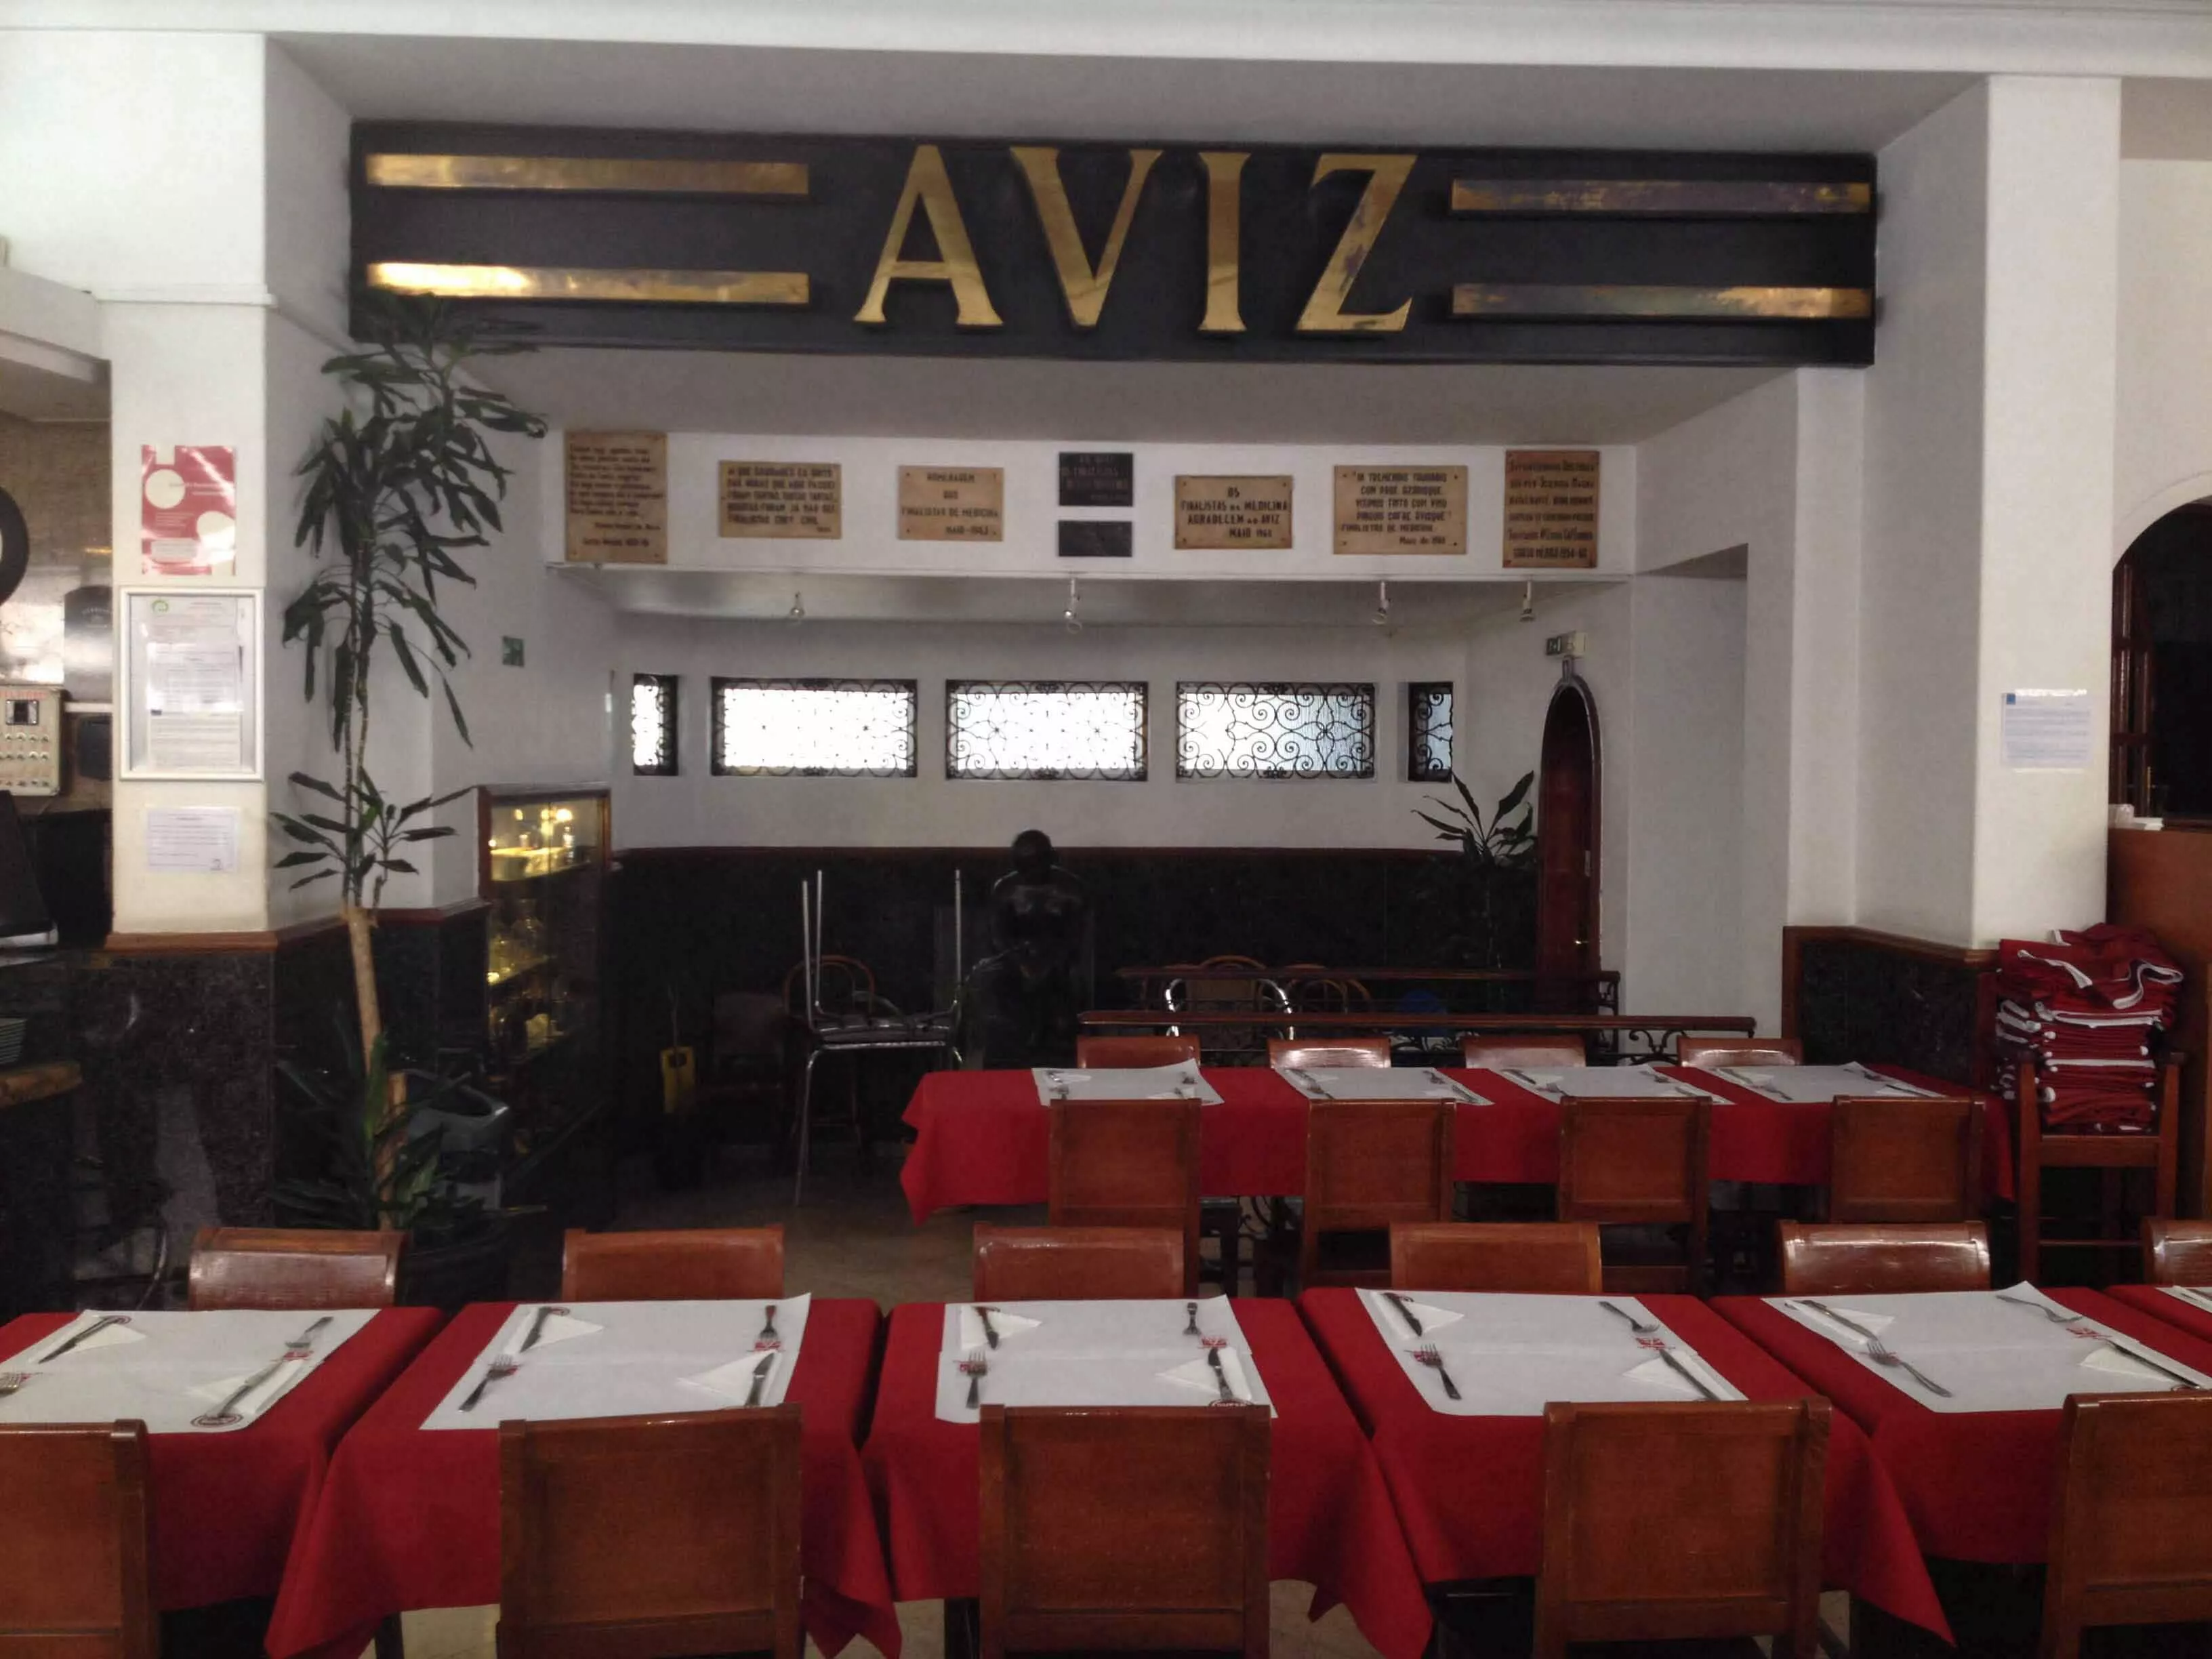 Aviz Tea Room in Portugal, Europe | Cafes,Billiards - Rated 3.5